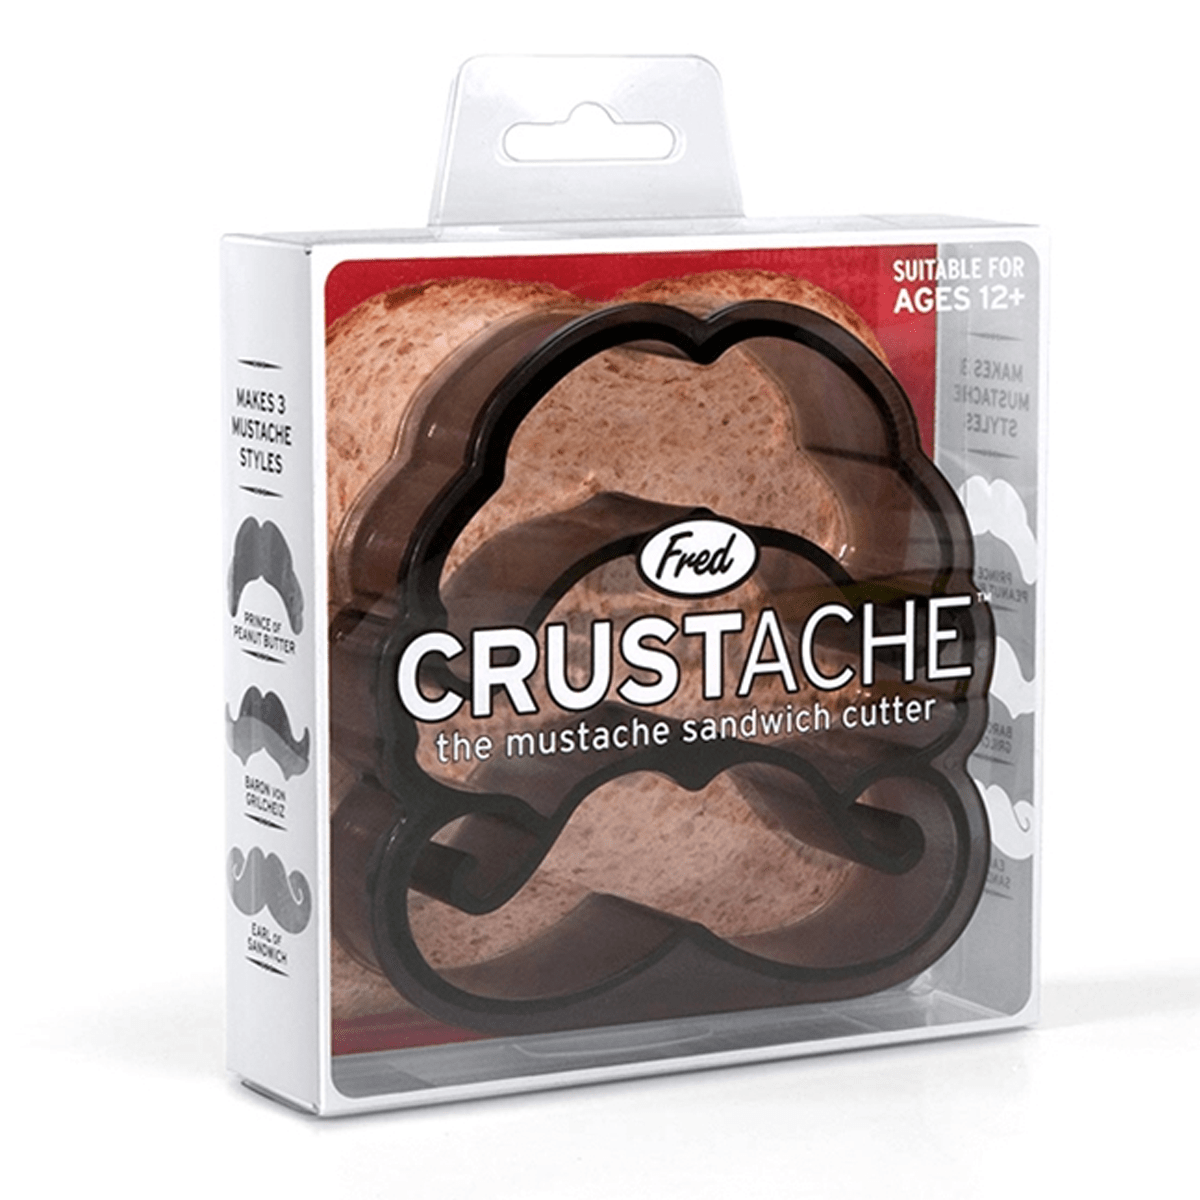 Crustache Novelty Mustache Shaped Crust Cutter - Fred – SnapZapp